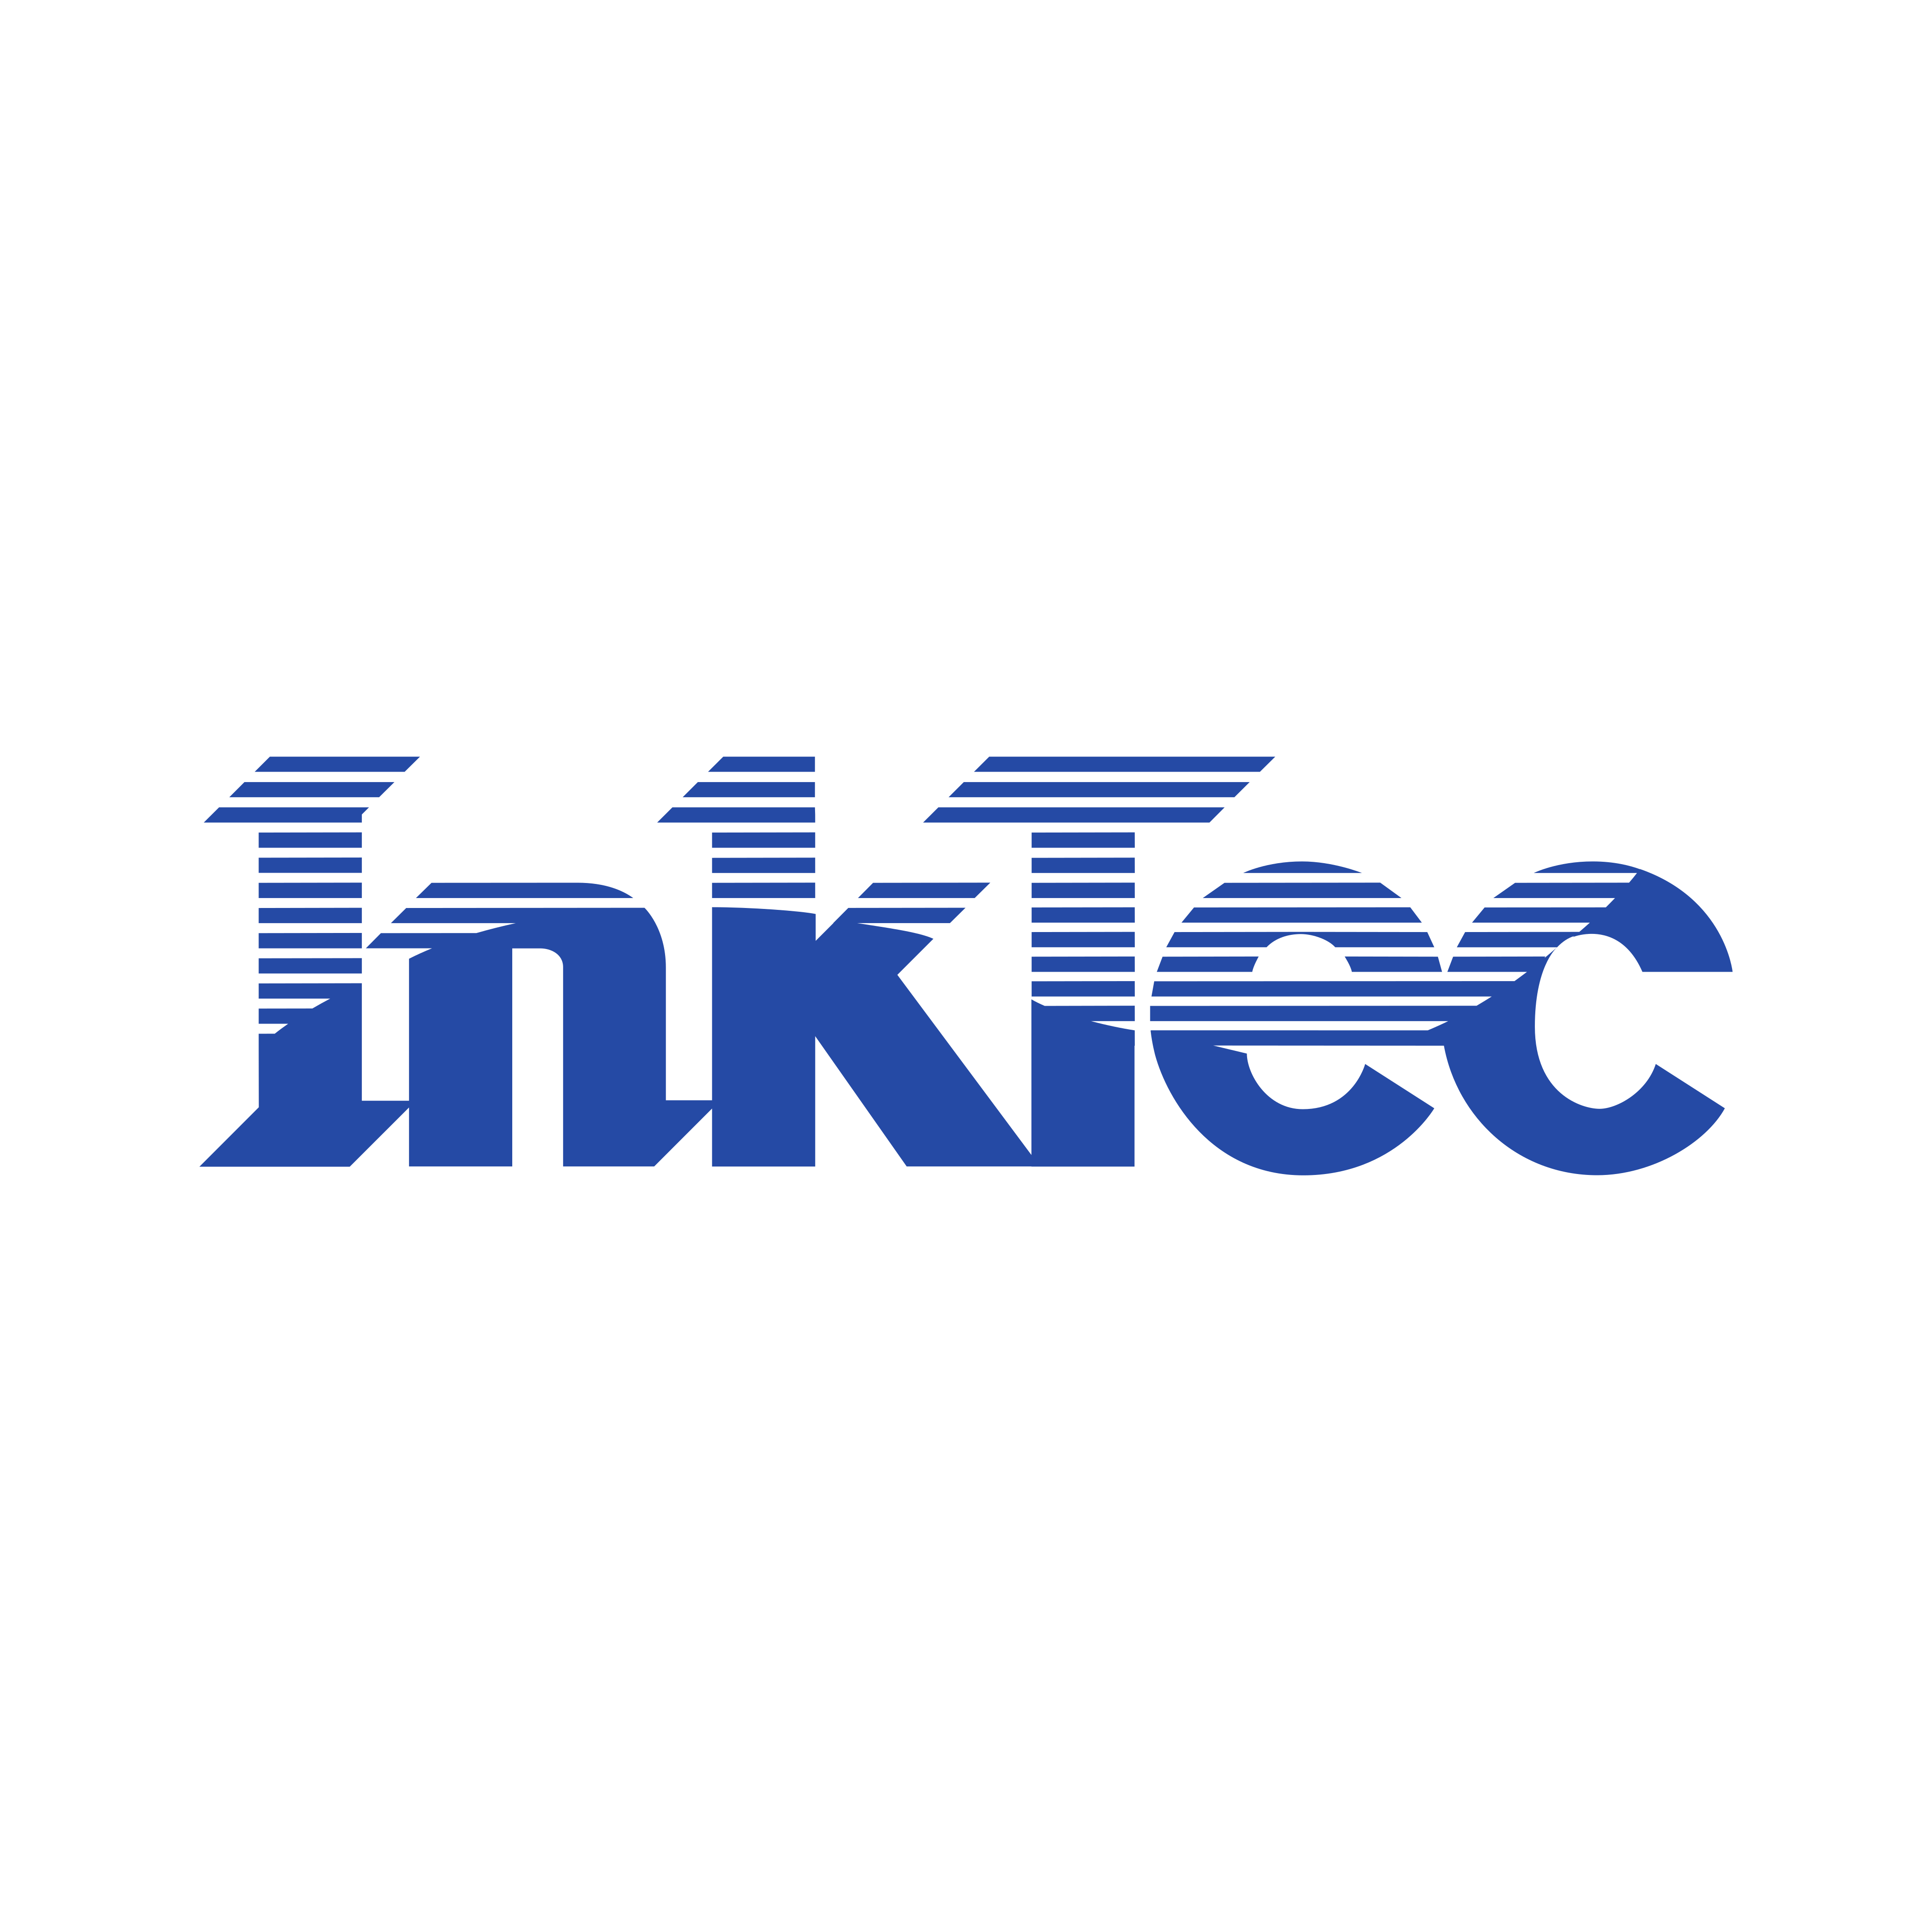 inktec logo 0 - Inktec Logo